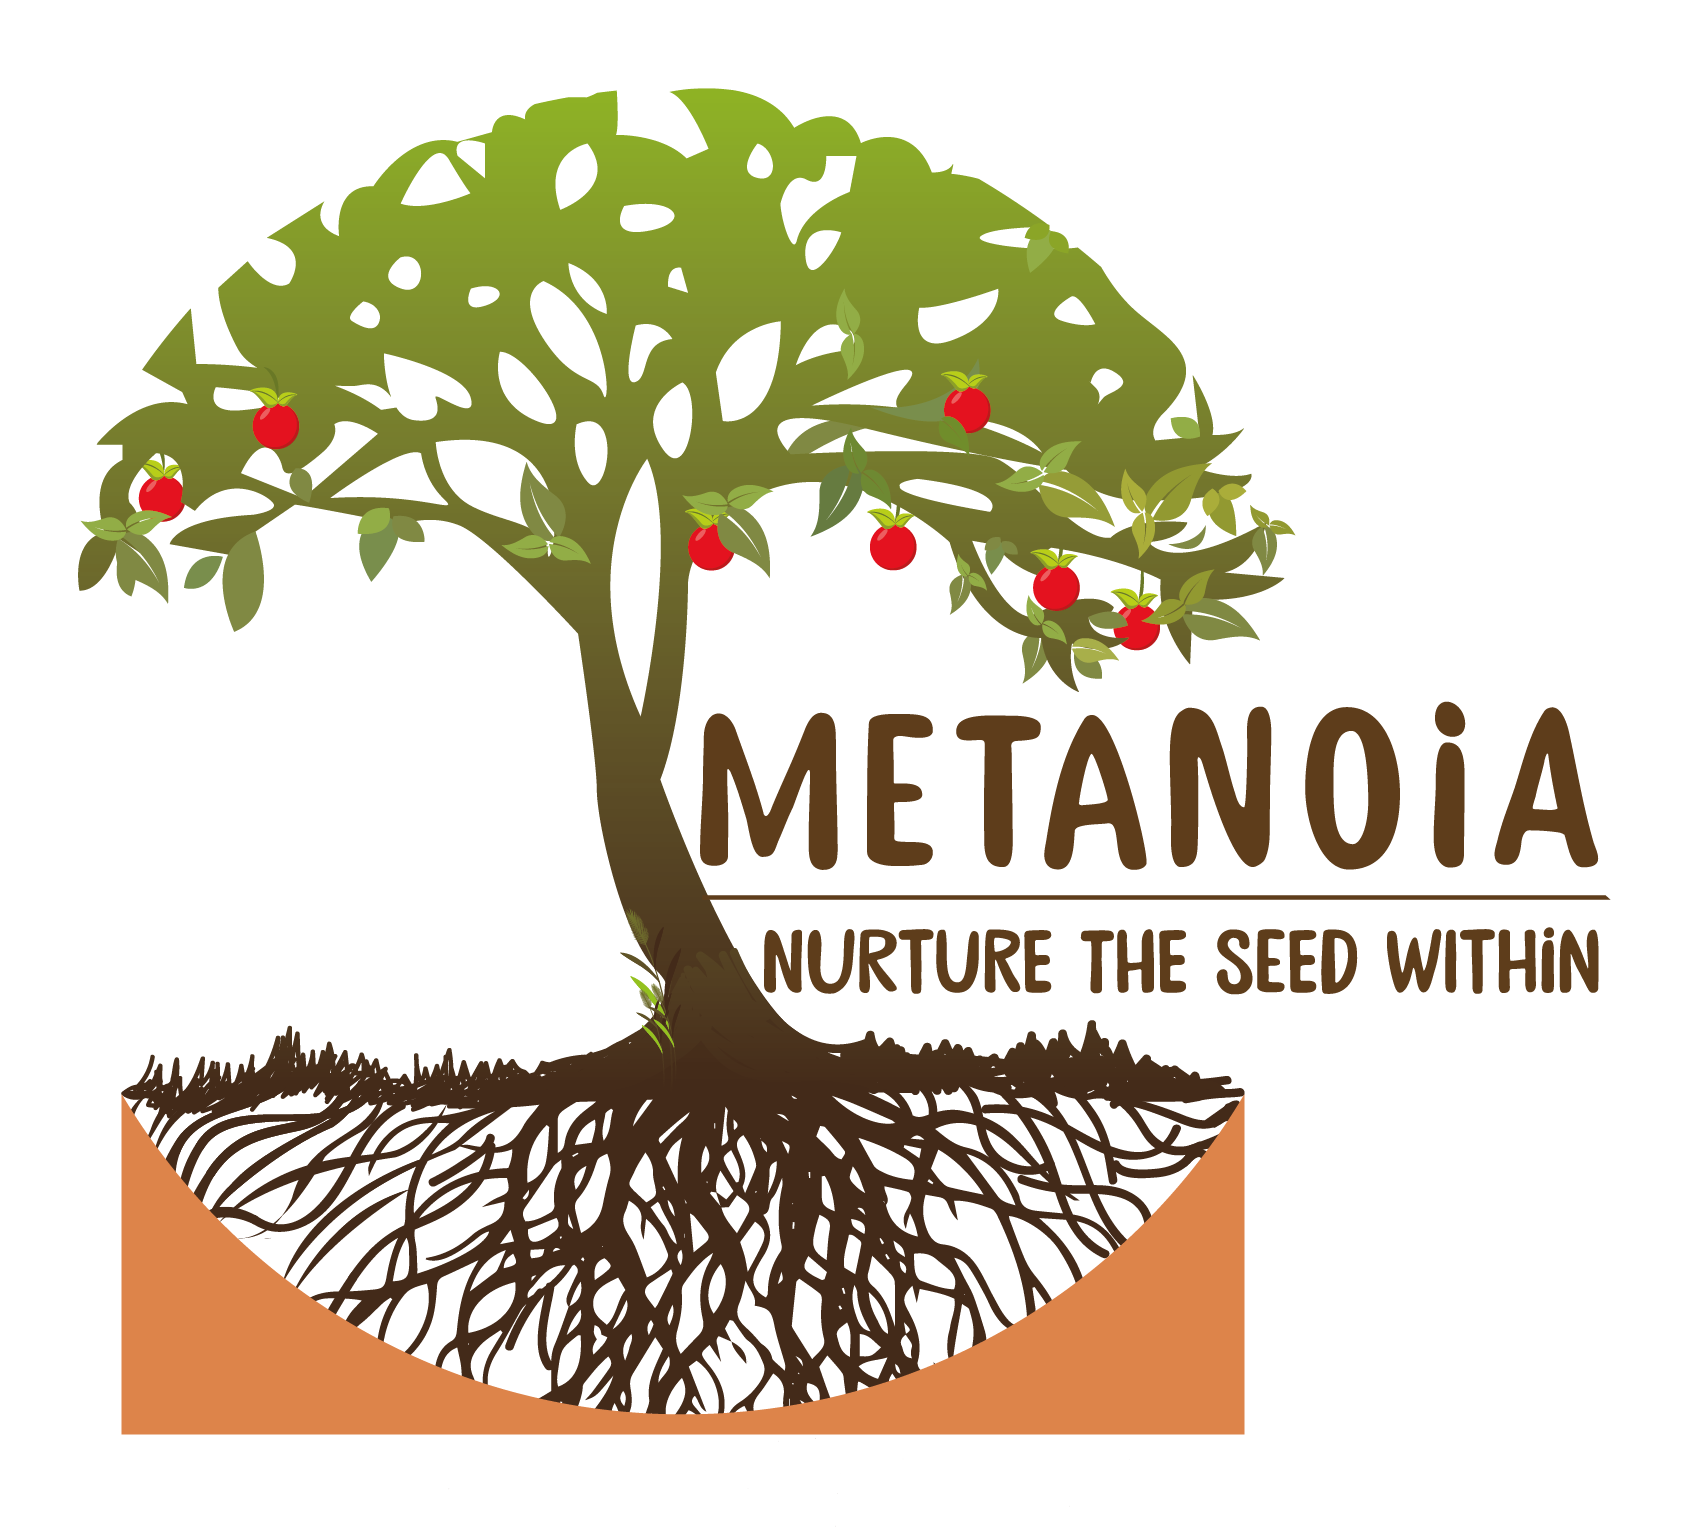 Metanoia - Nurture the seed within